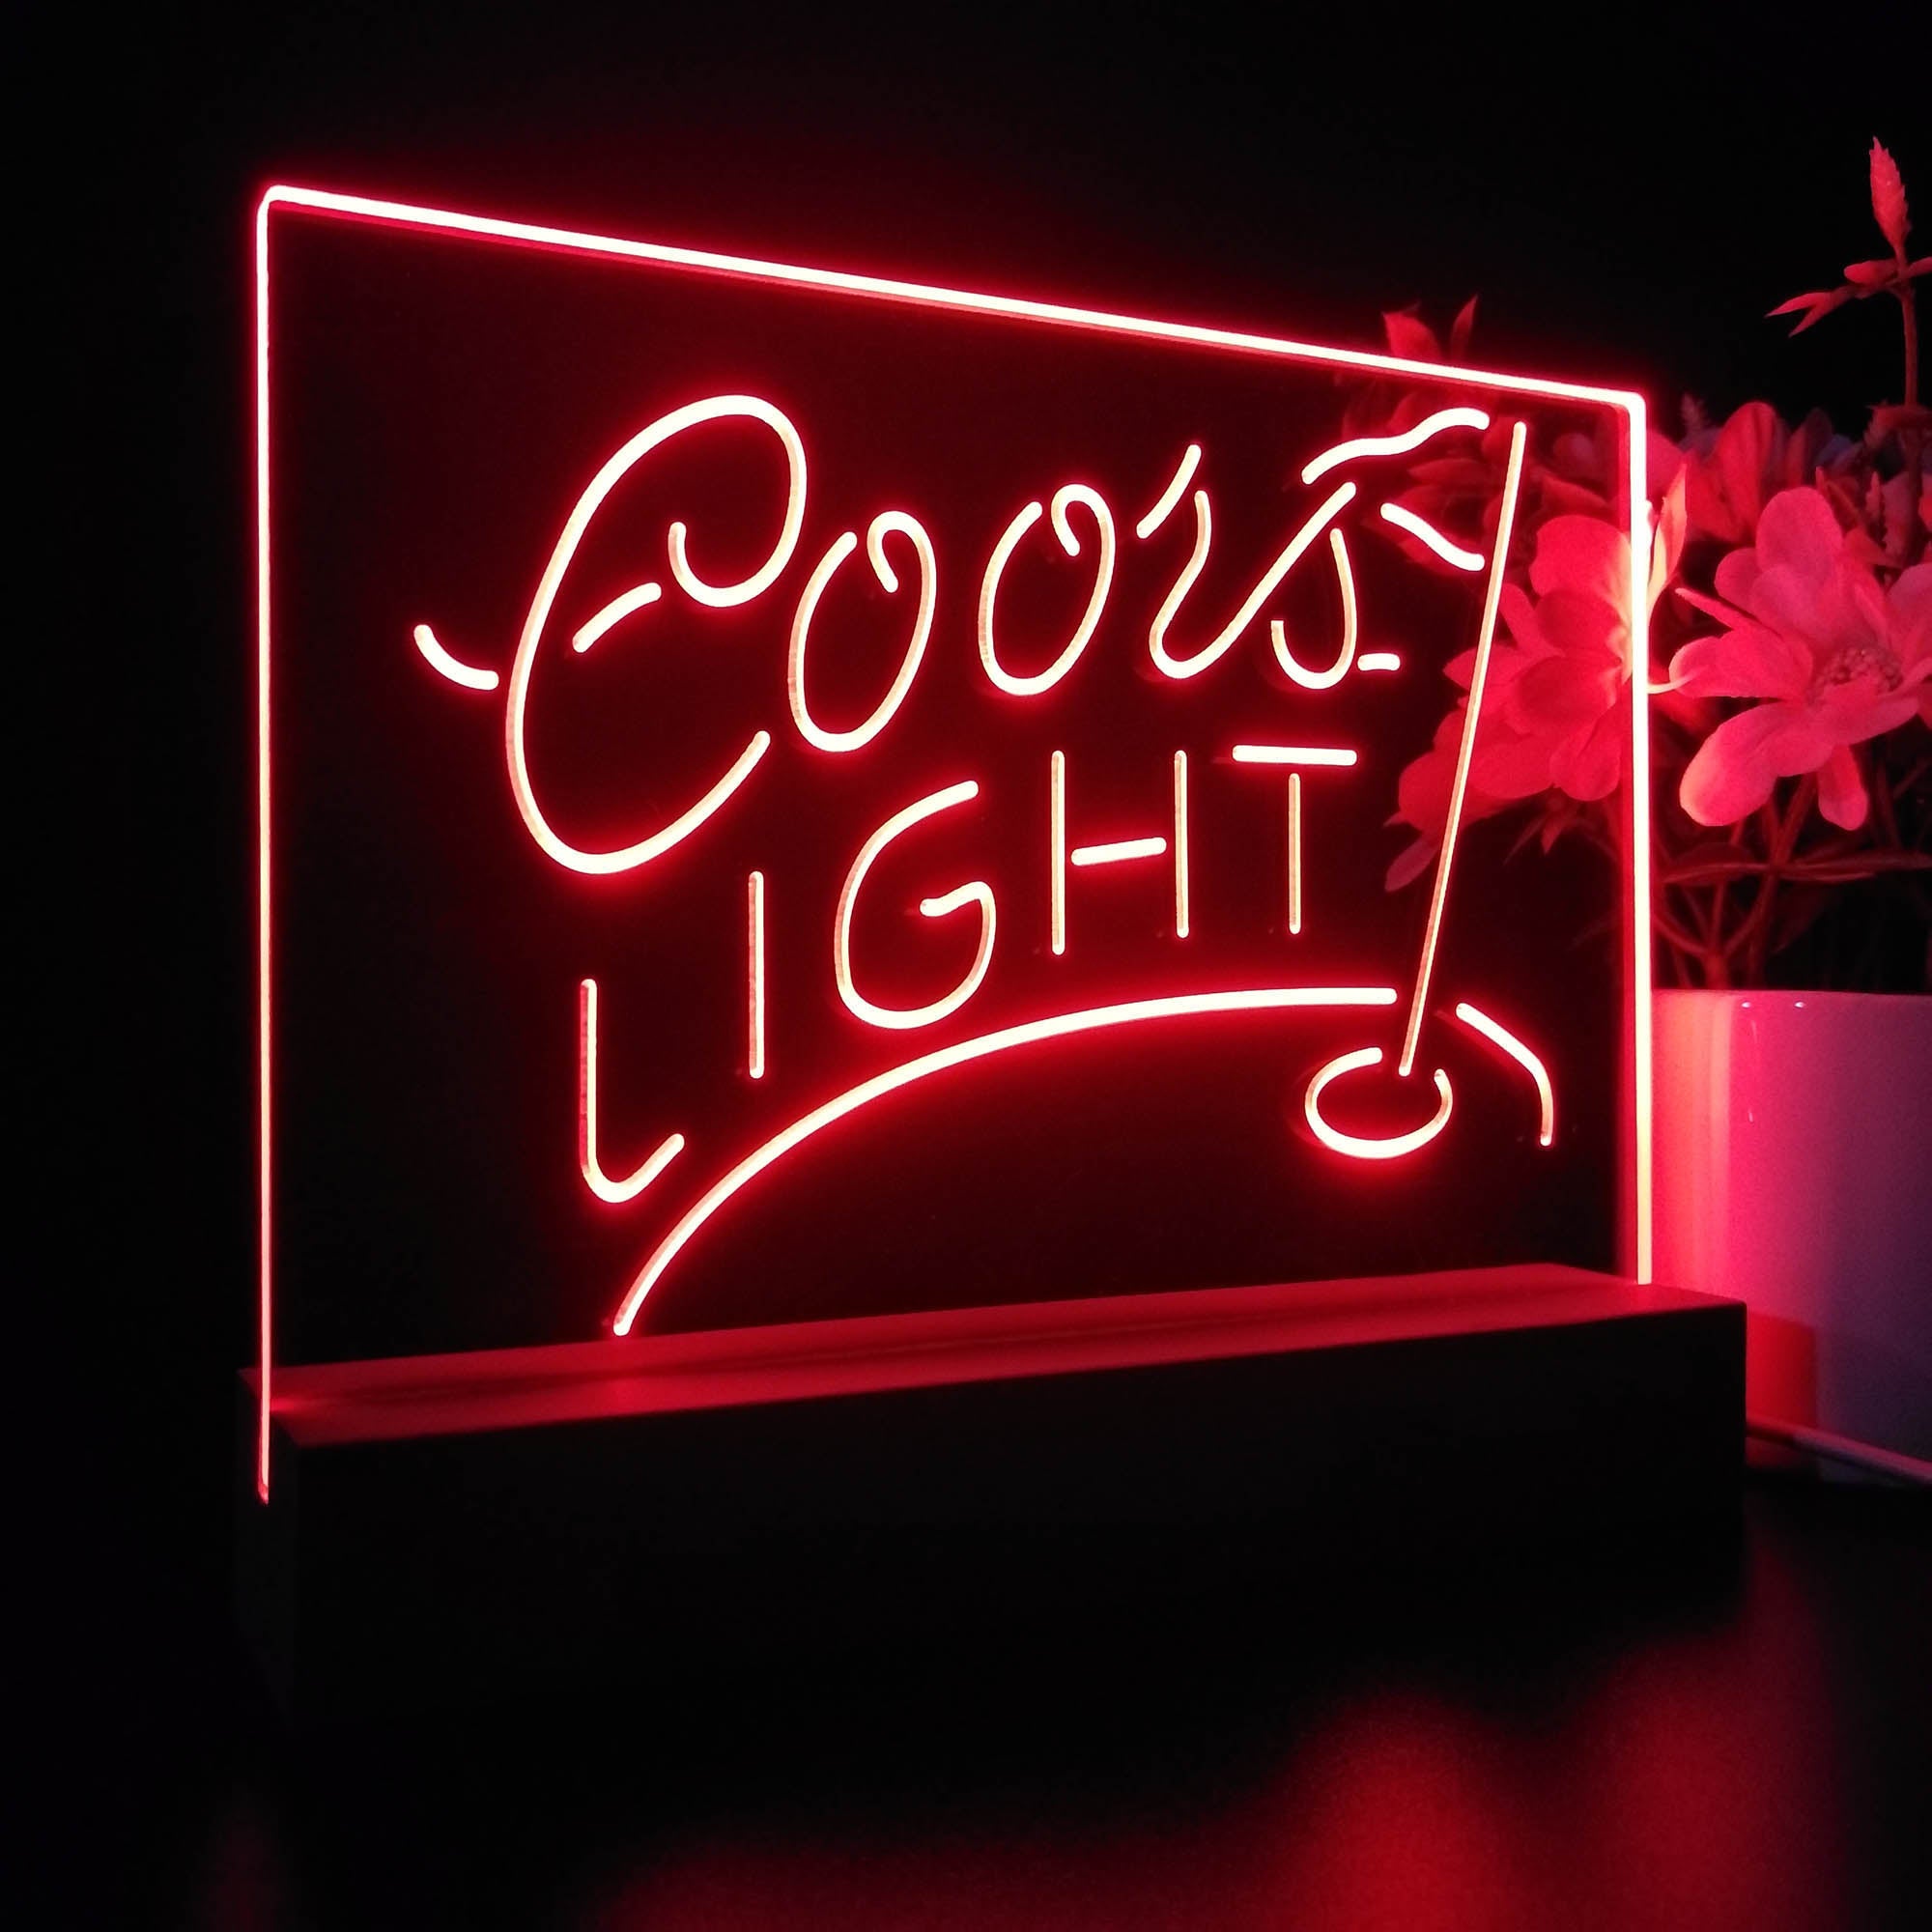 Coors Light Golf Night Light LED Sign